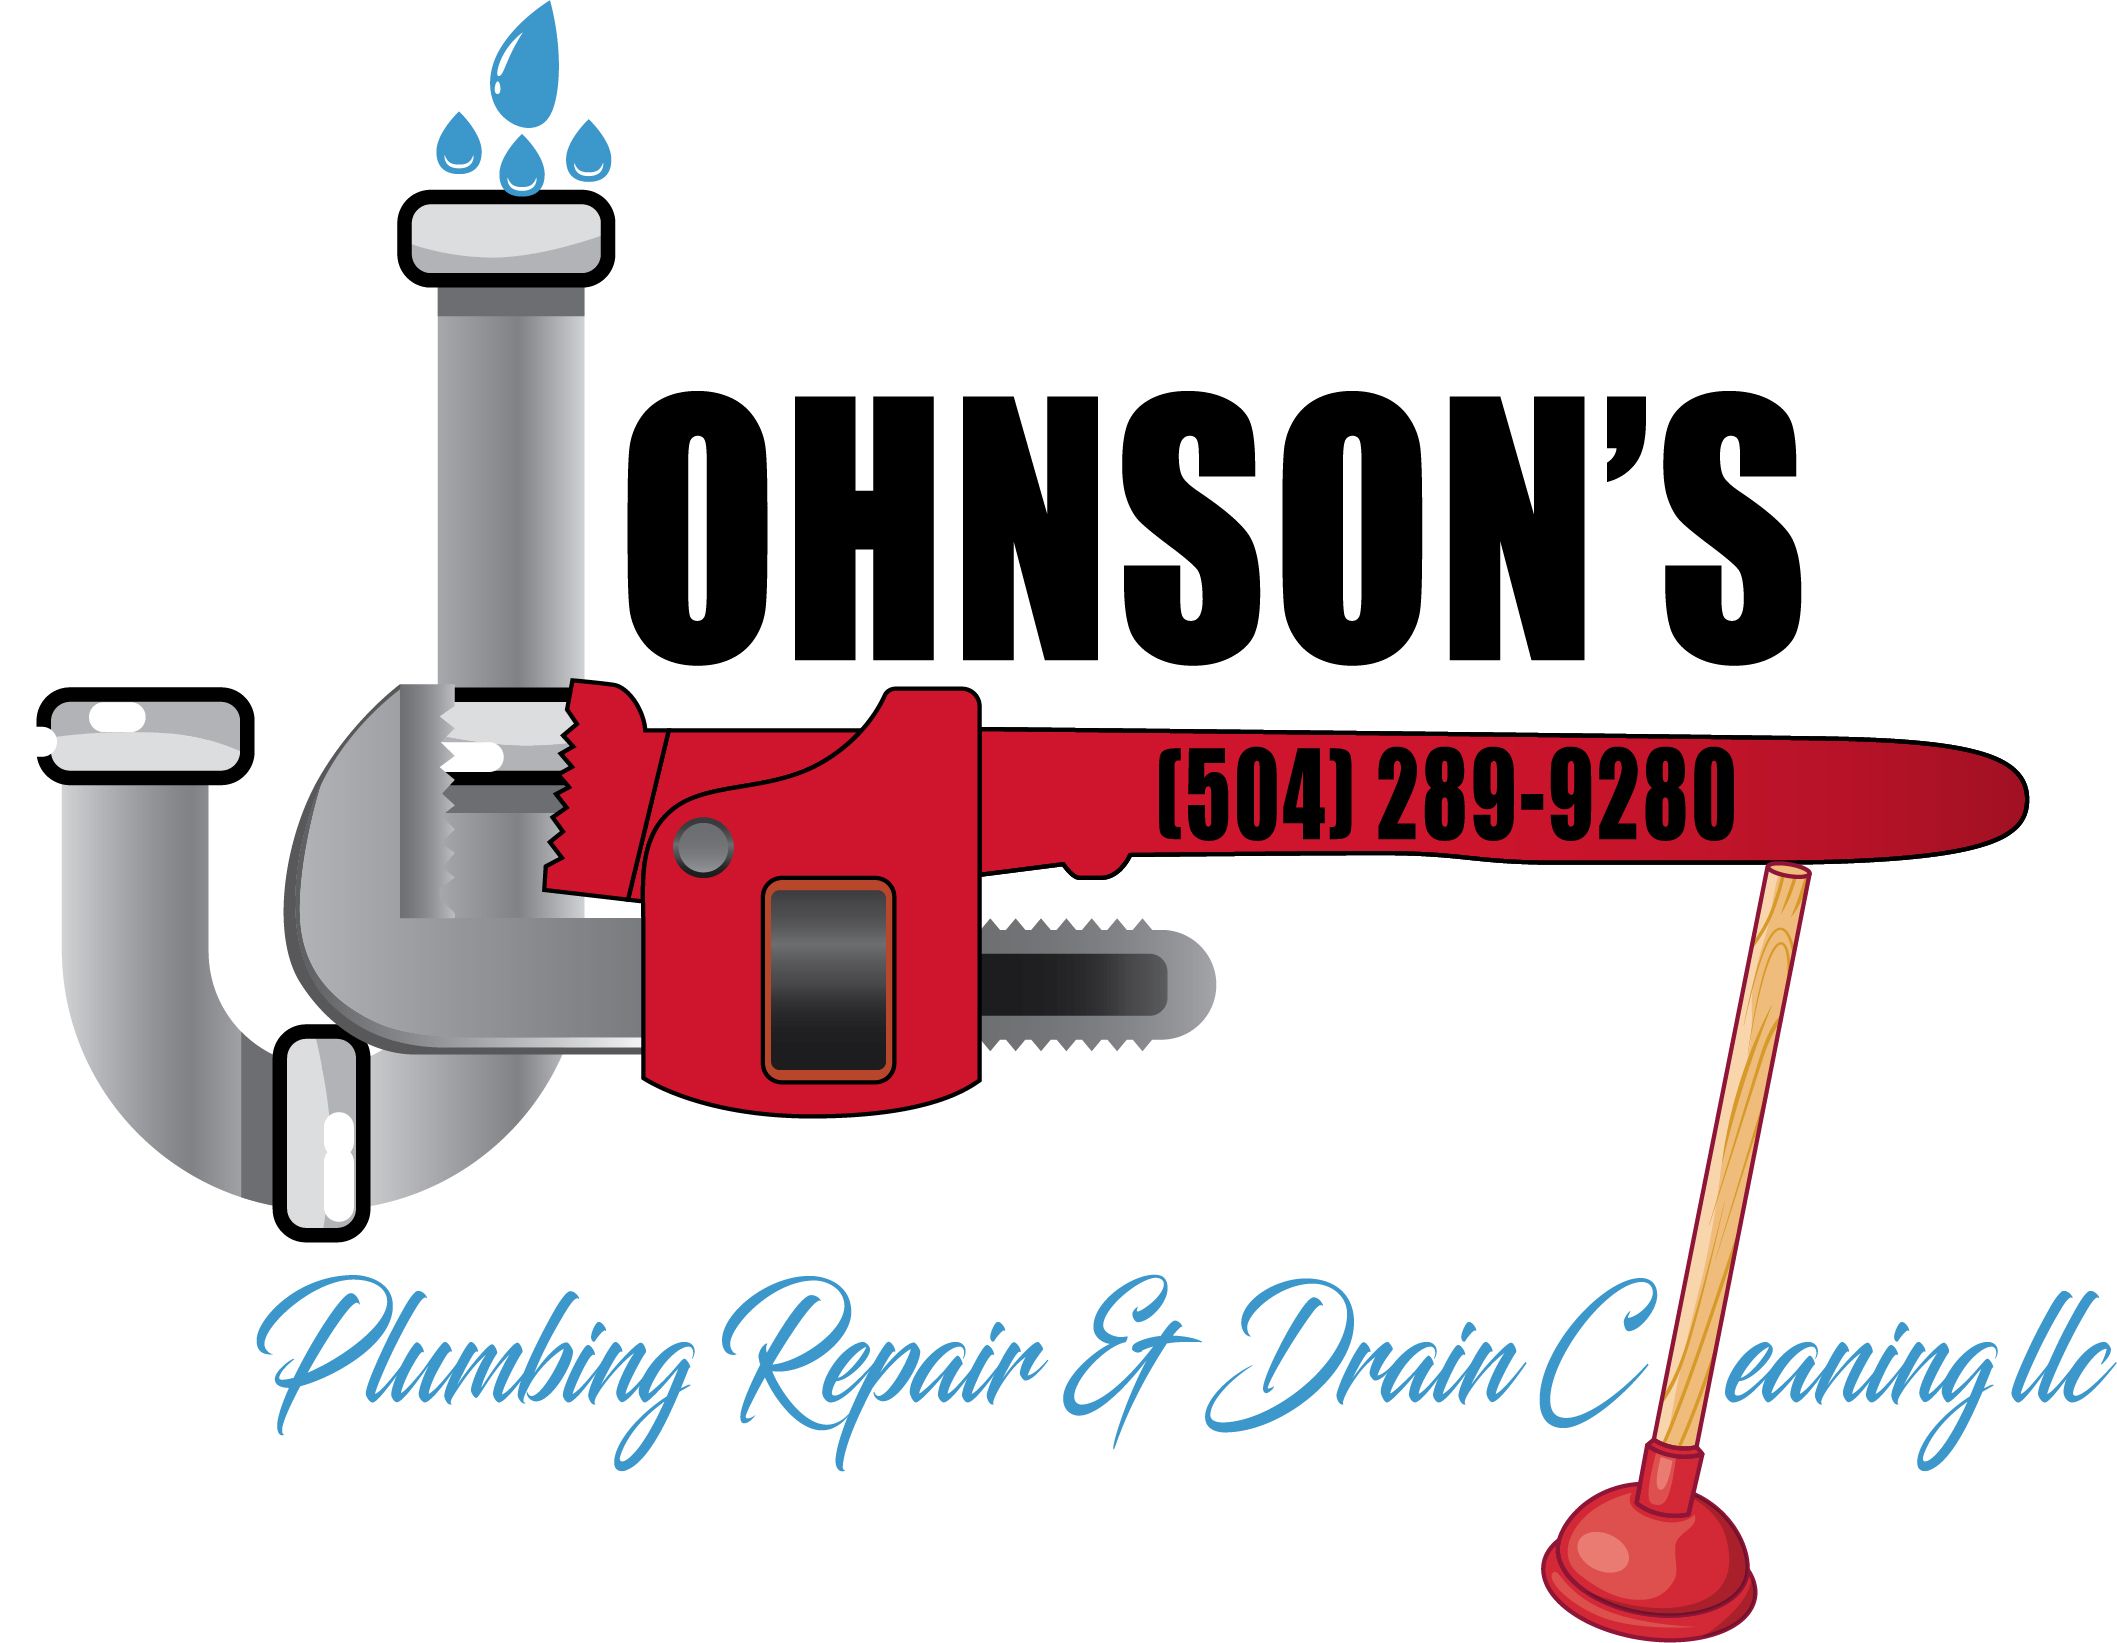 Johnson's Plumbing Repair & Drain Cleaning LLC